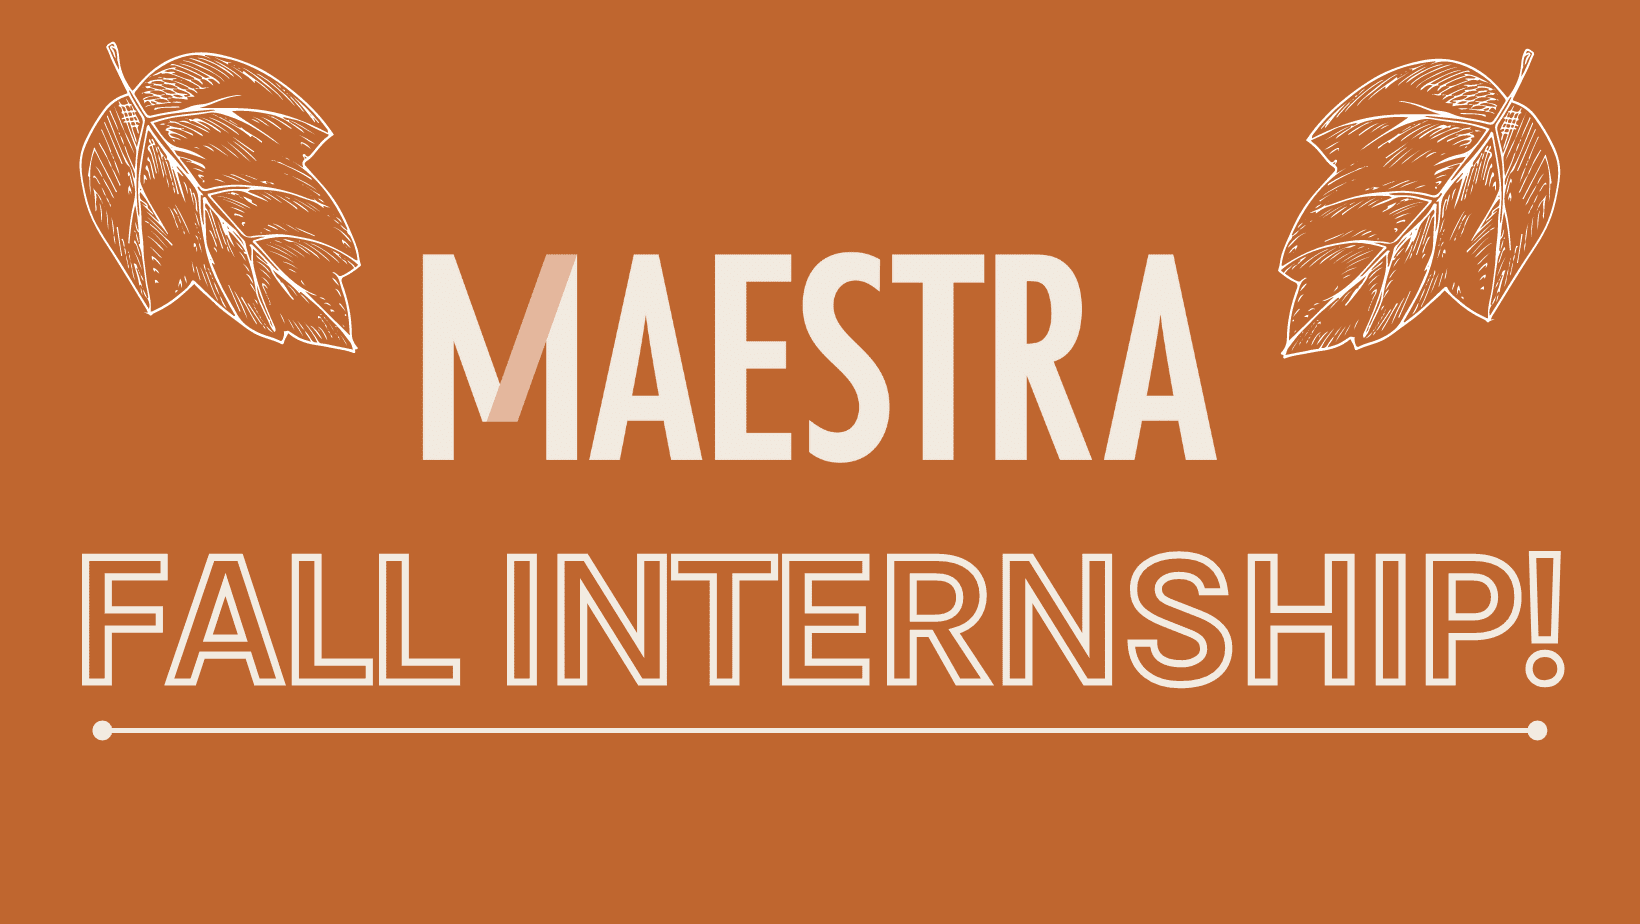 Fall Internship Opportunity • Maestra